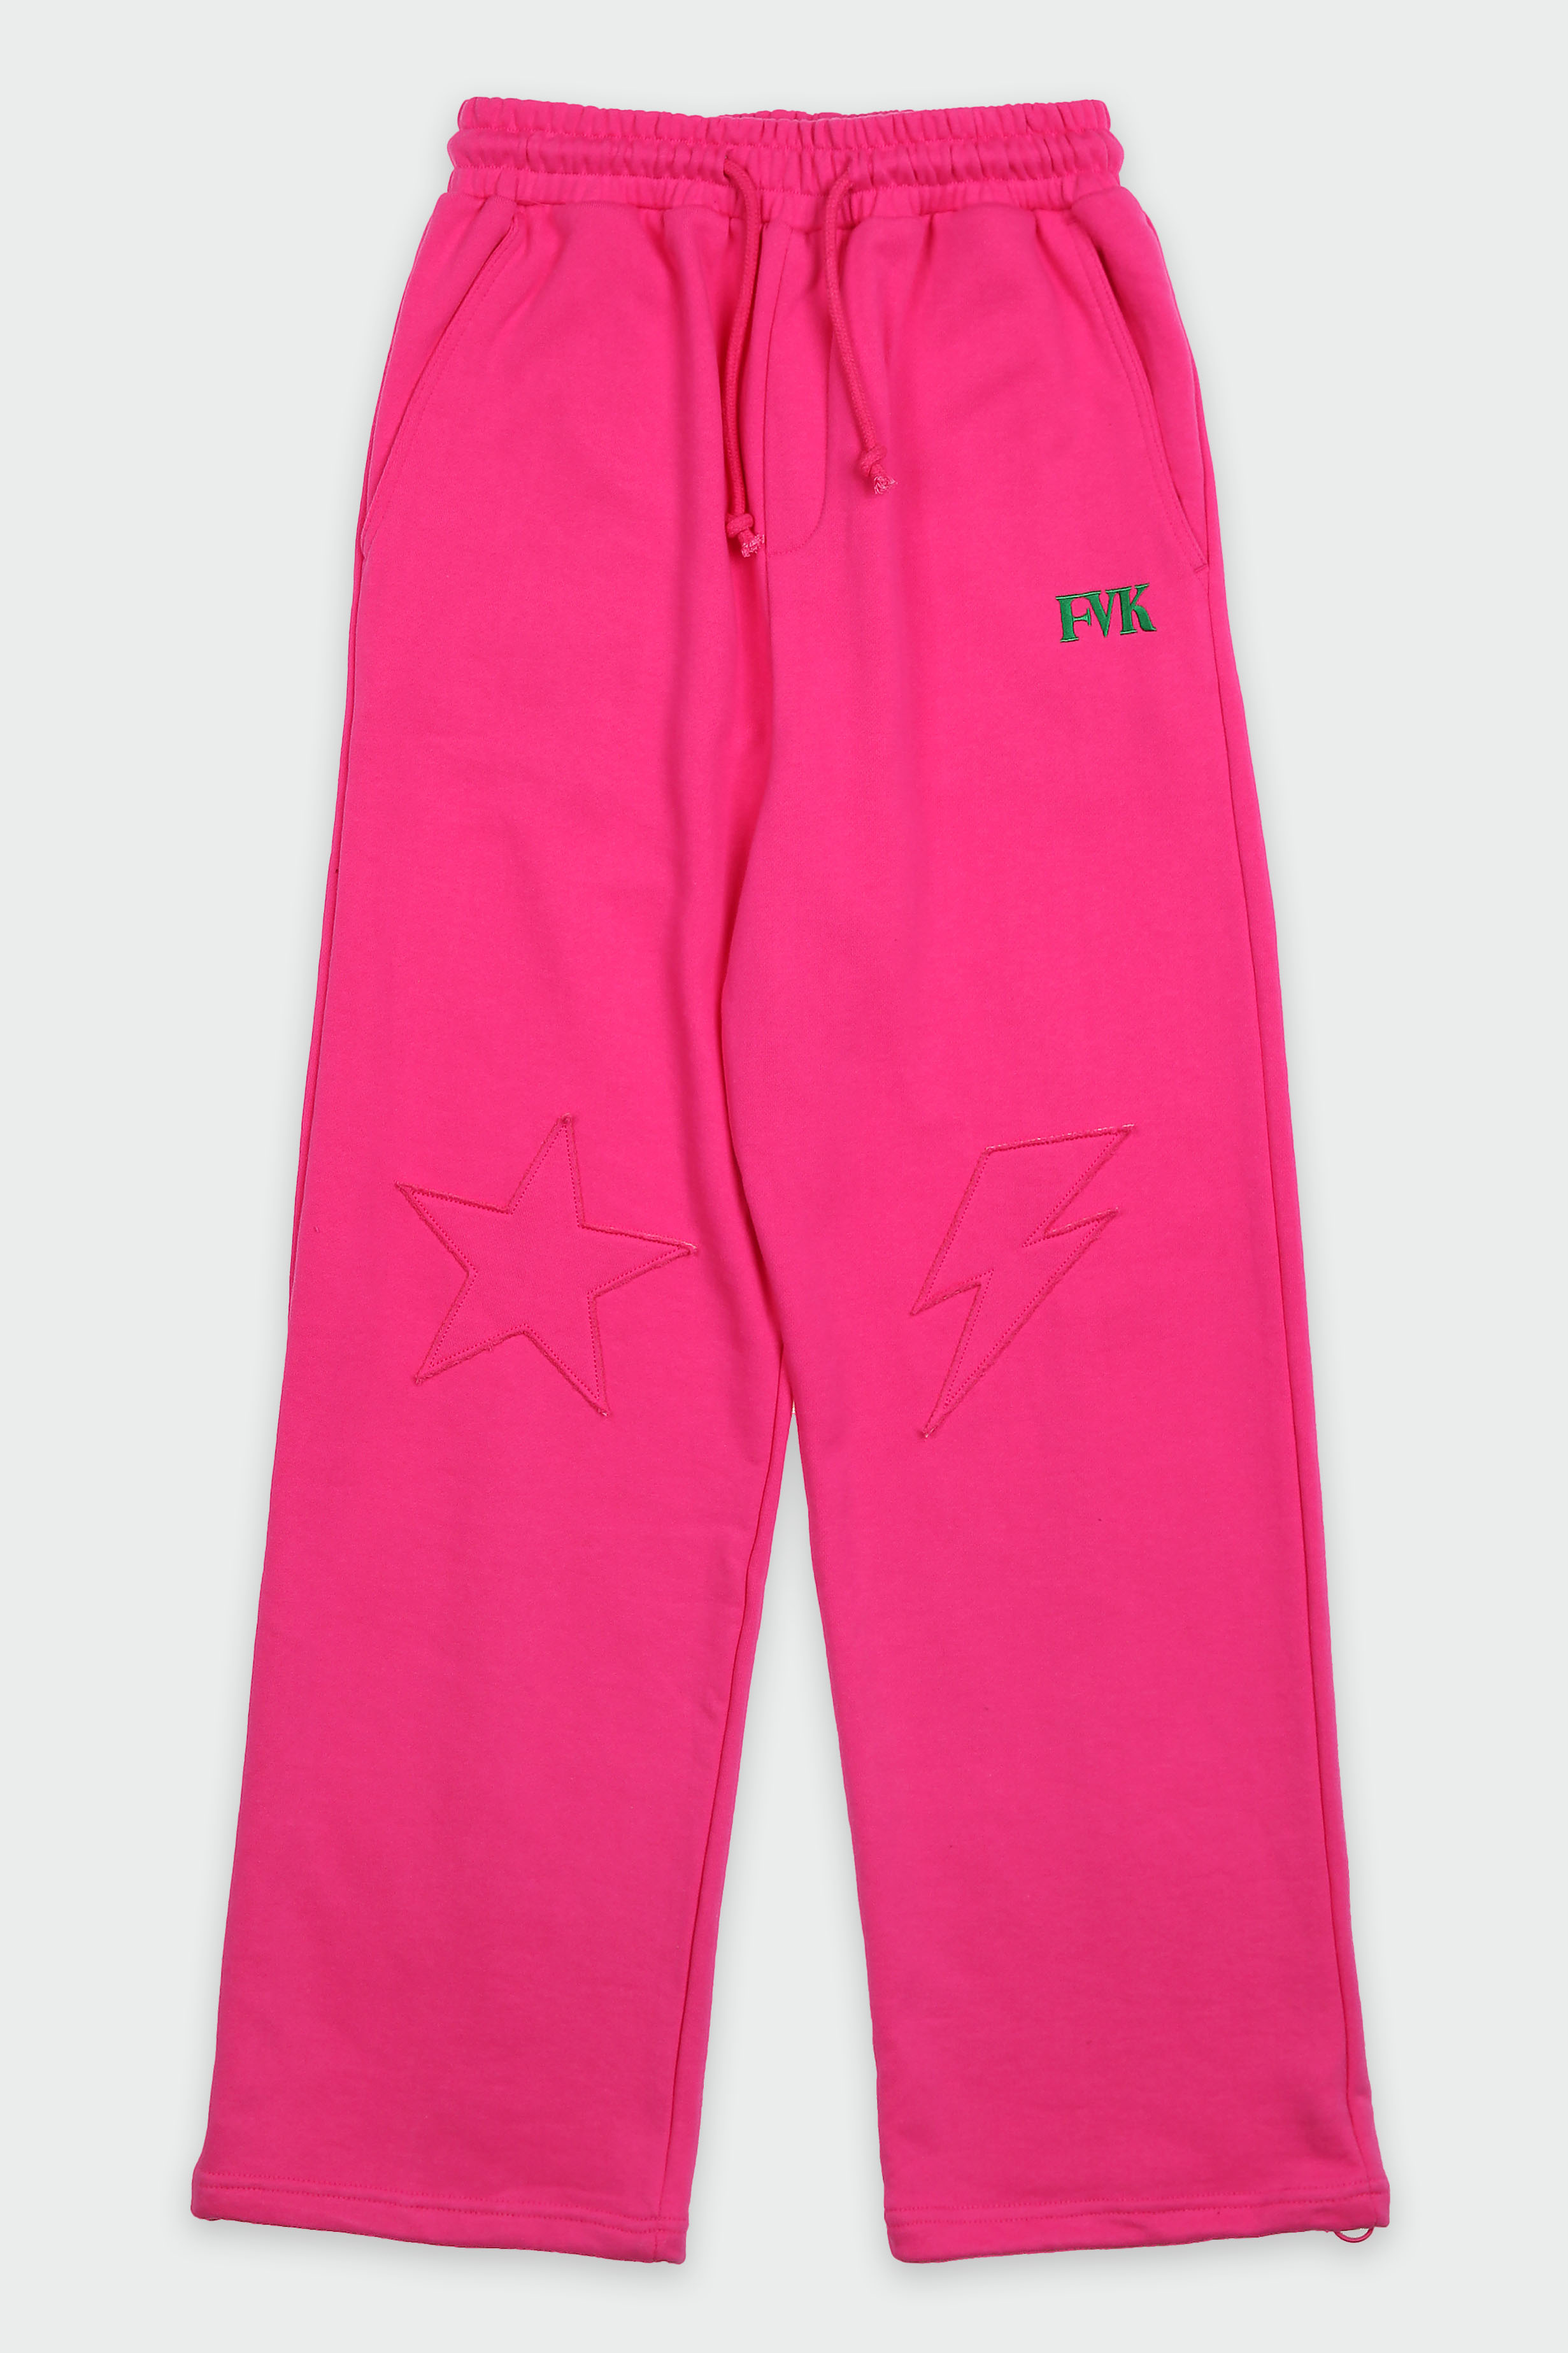 Patch sweatpants(pink)